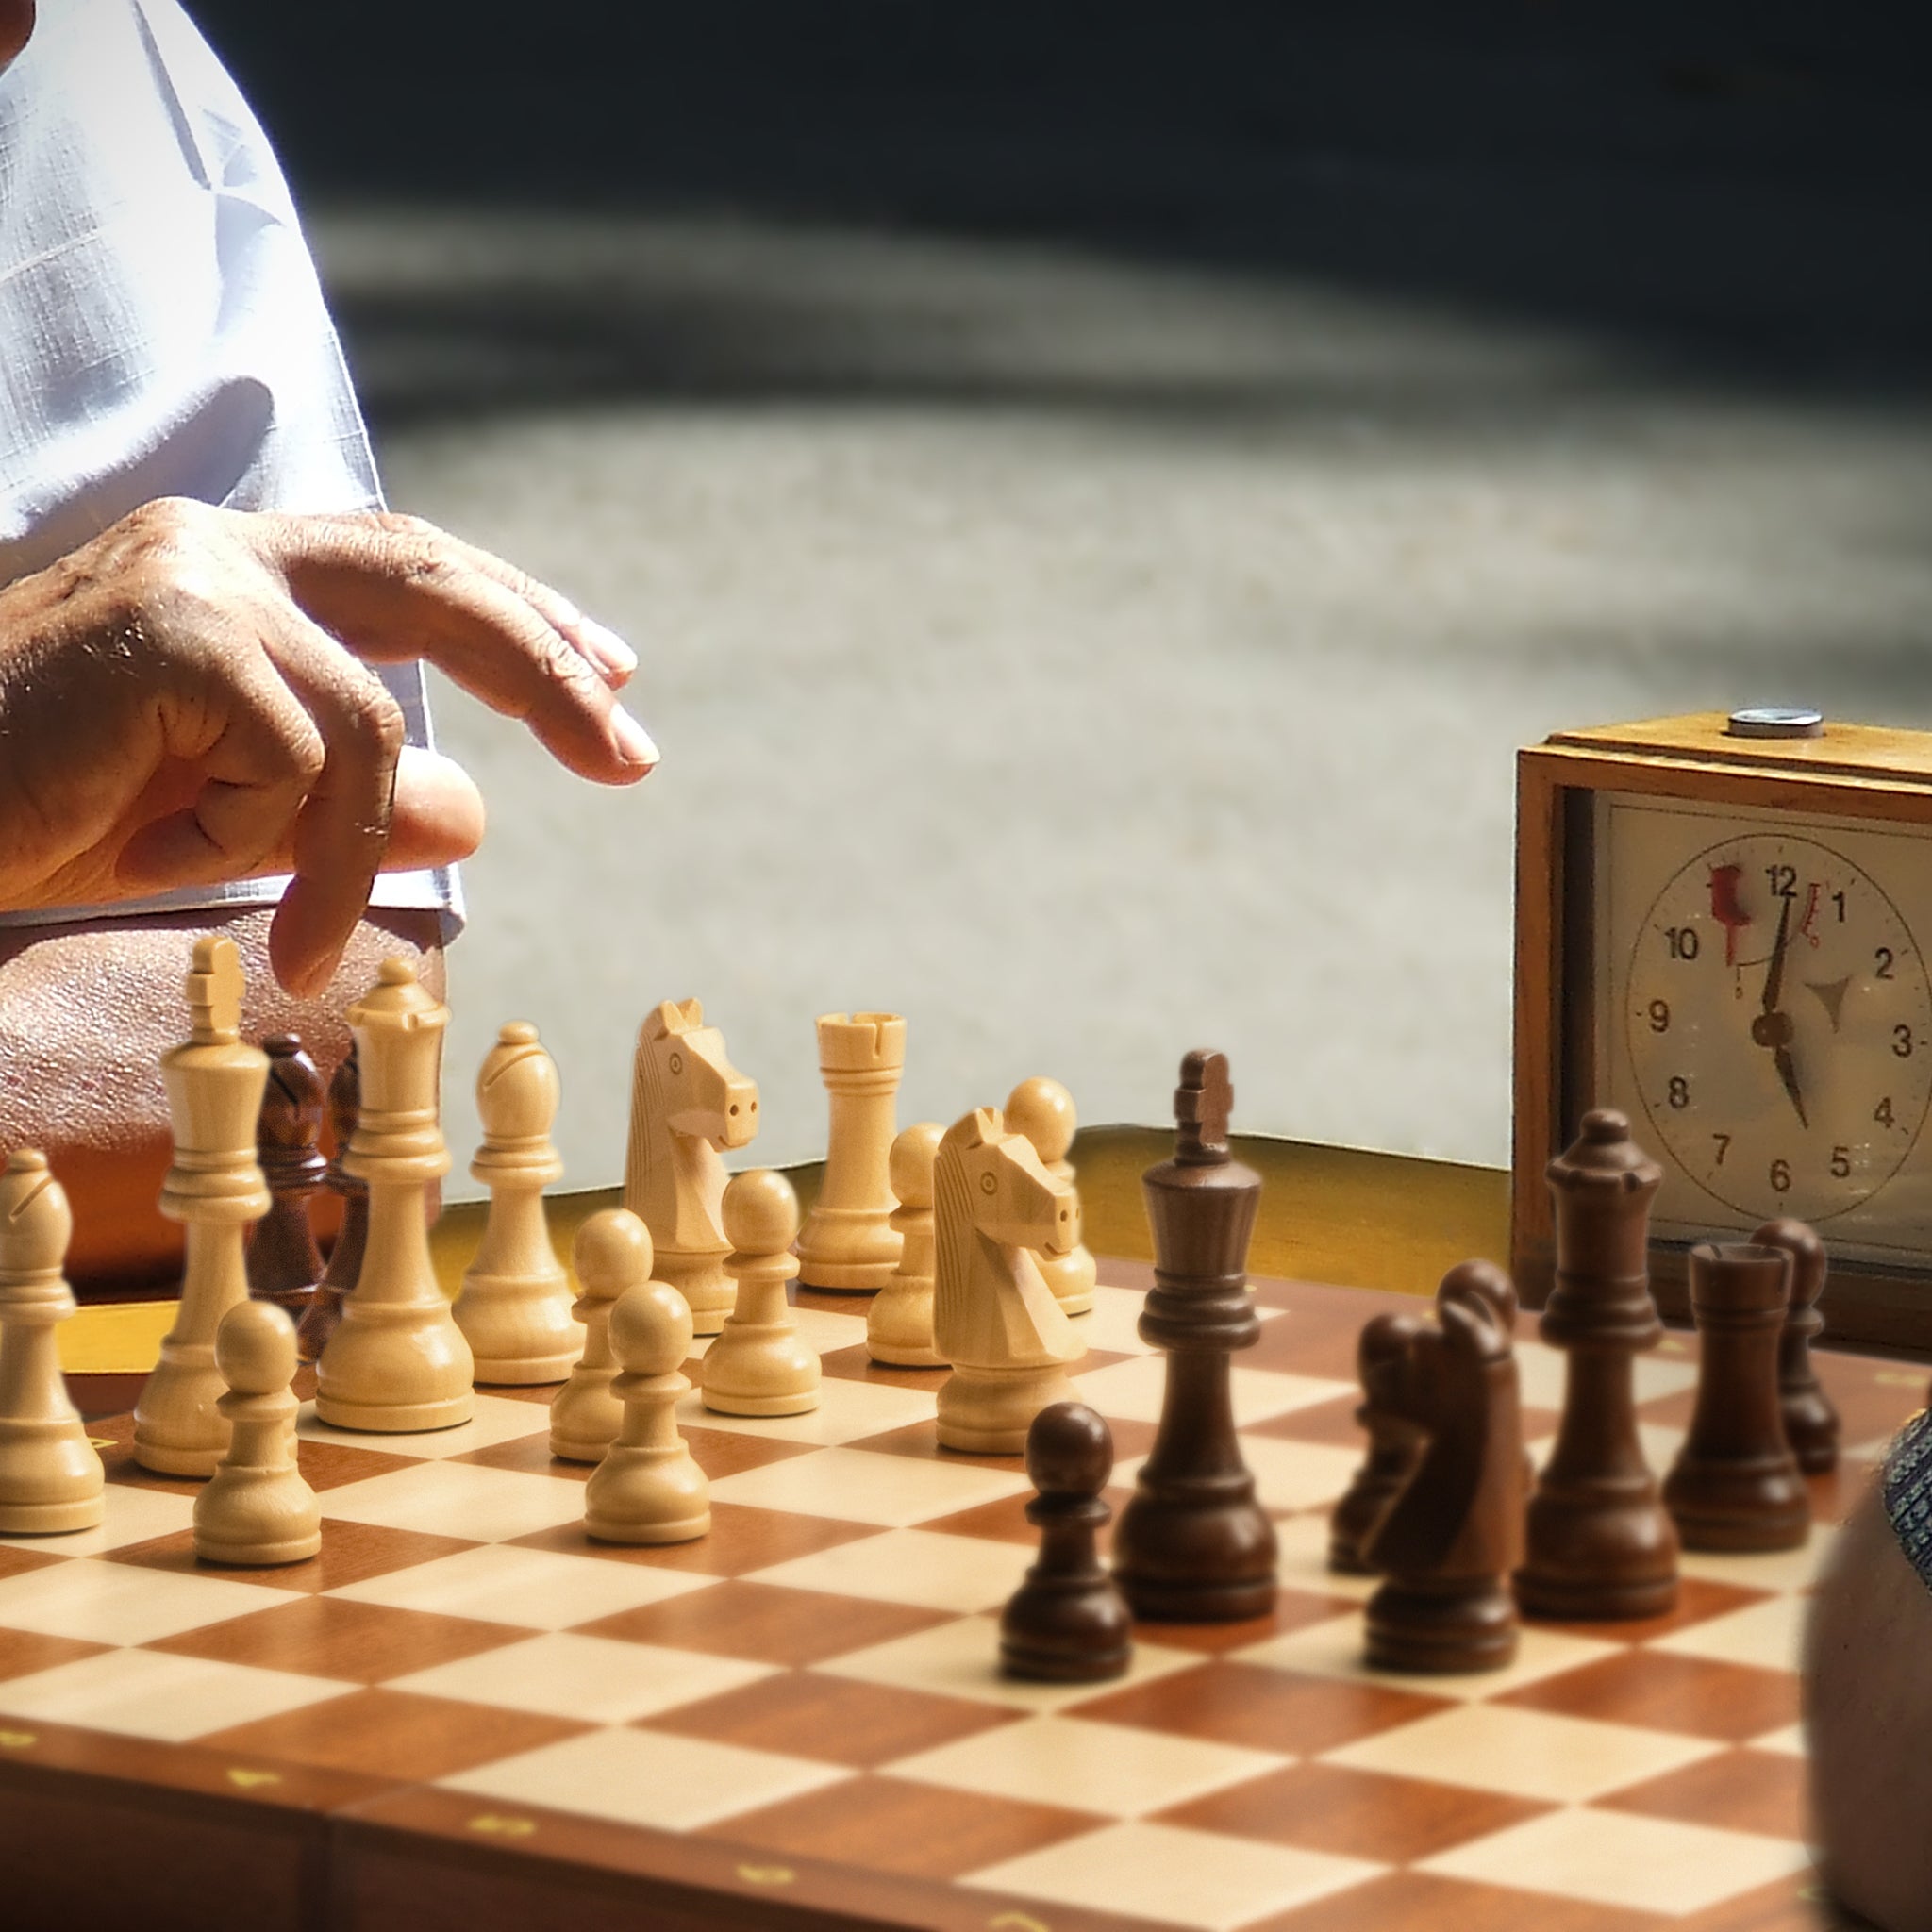 Husaria Professional Staunton Tournament No. 6 Wooden Chess Game Set, 3.9" Kings-Husaria